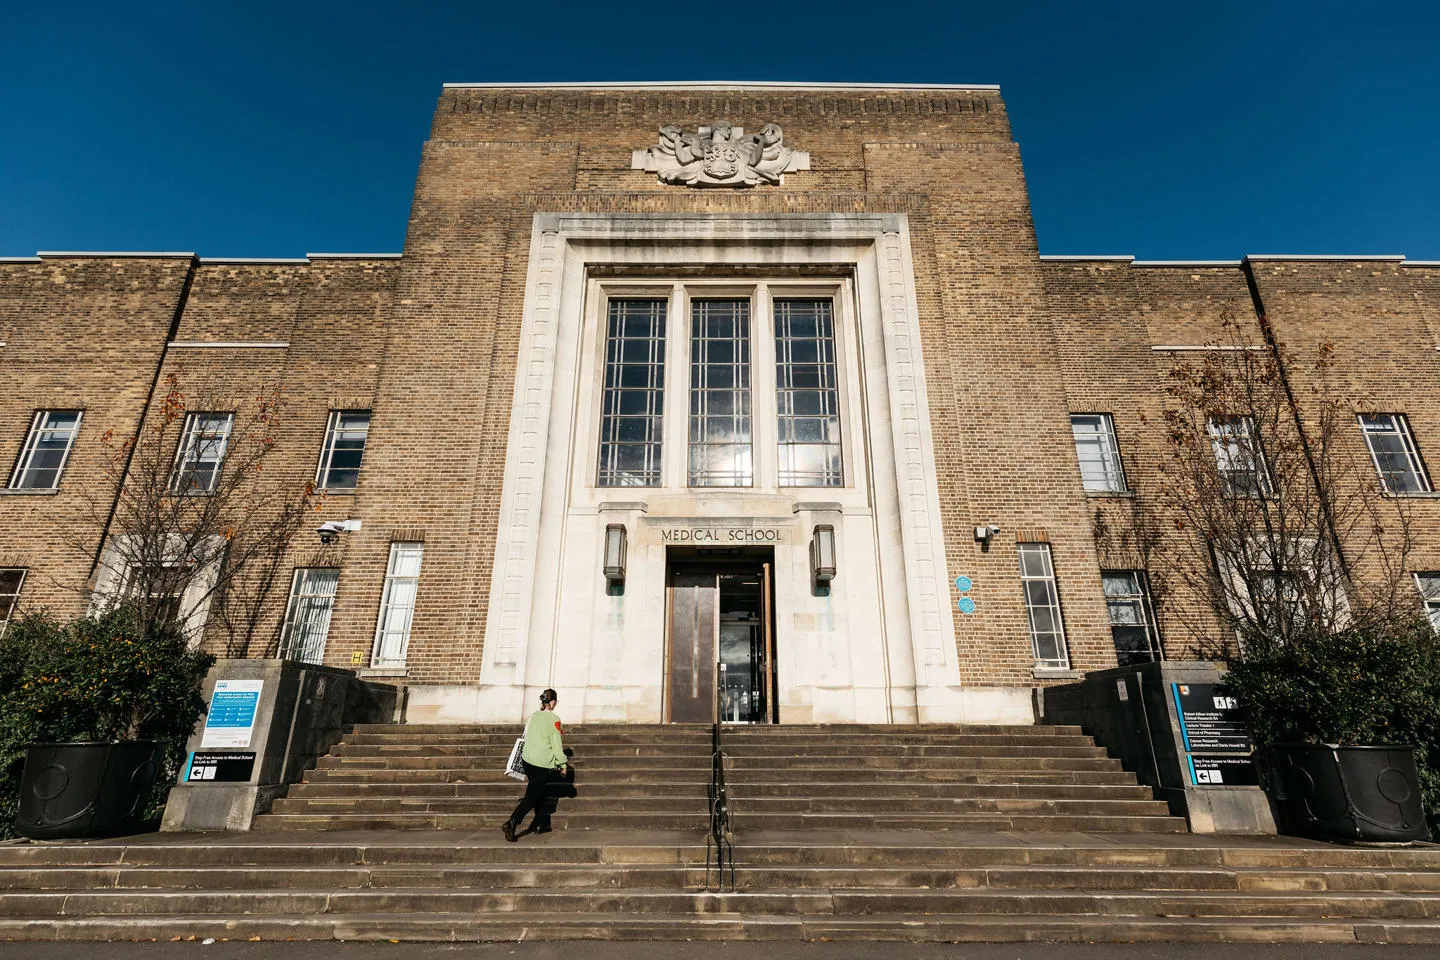 Facade of the University of Birmingham Medical School